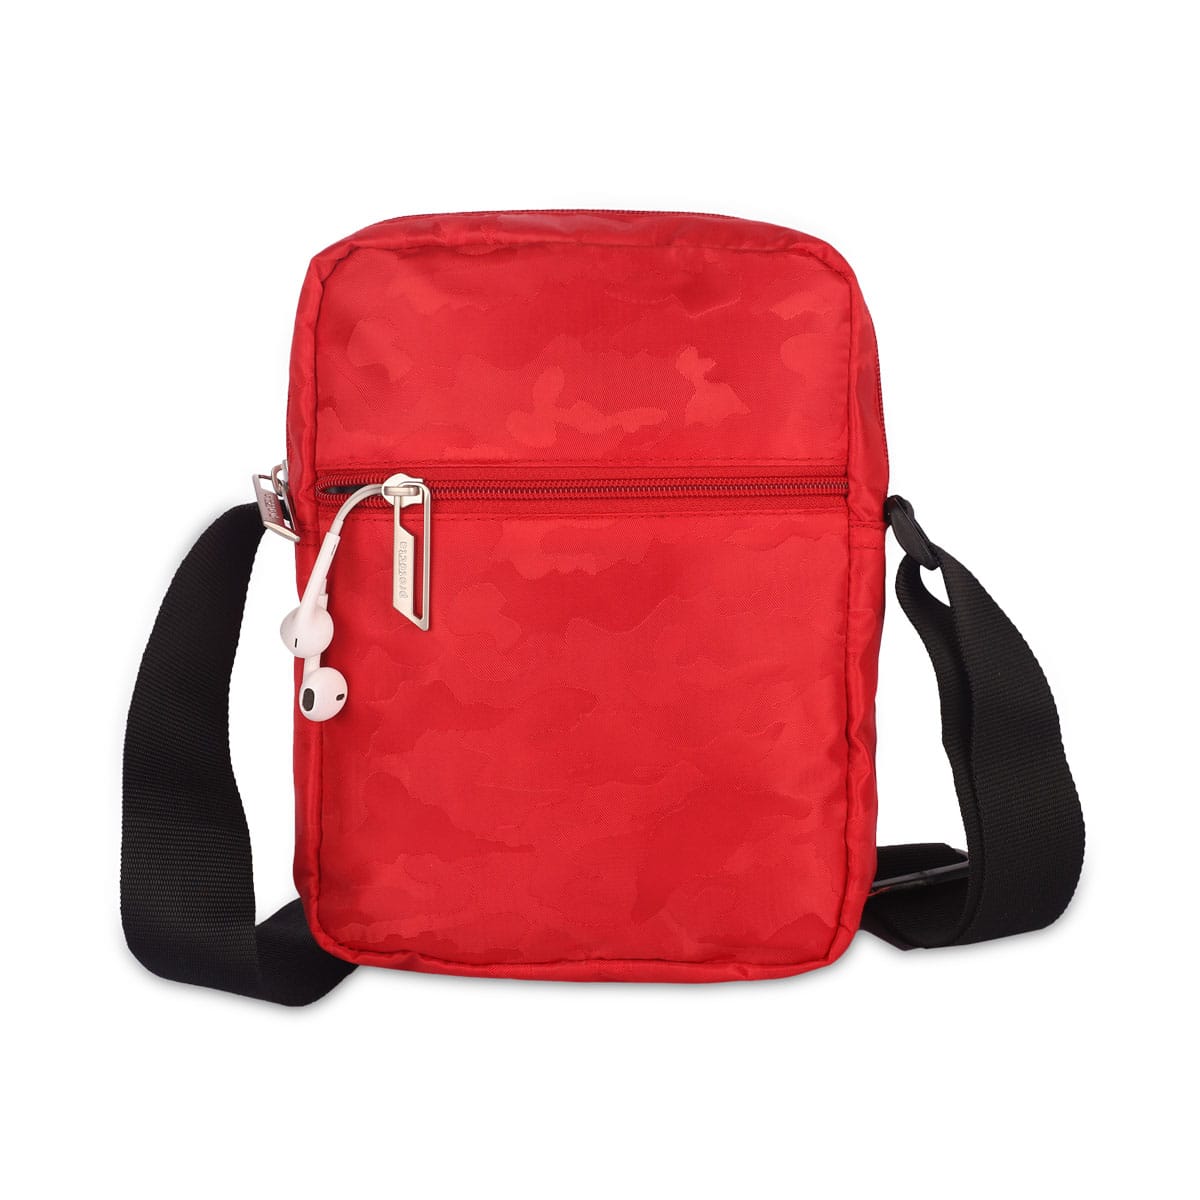 Red| Protecta Camo Unisex Sling Bag-Main